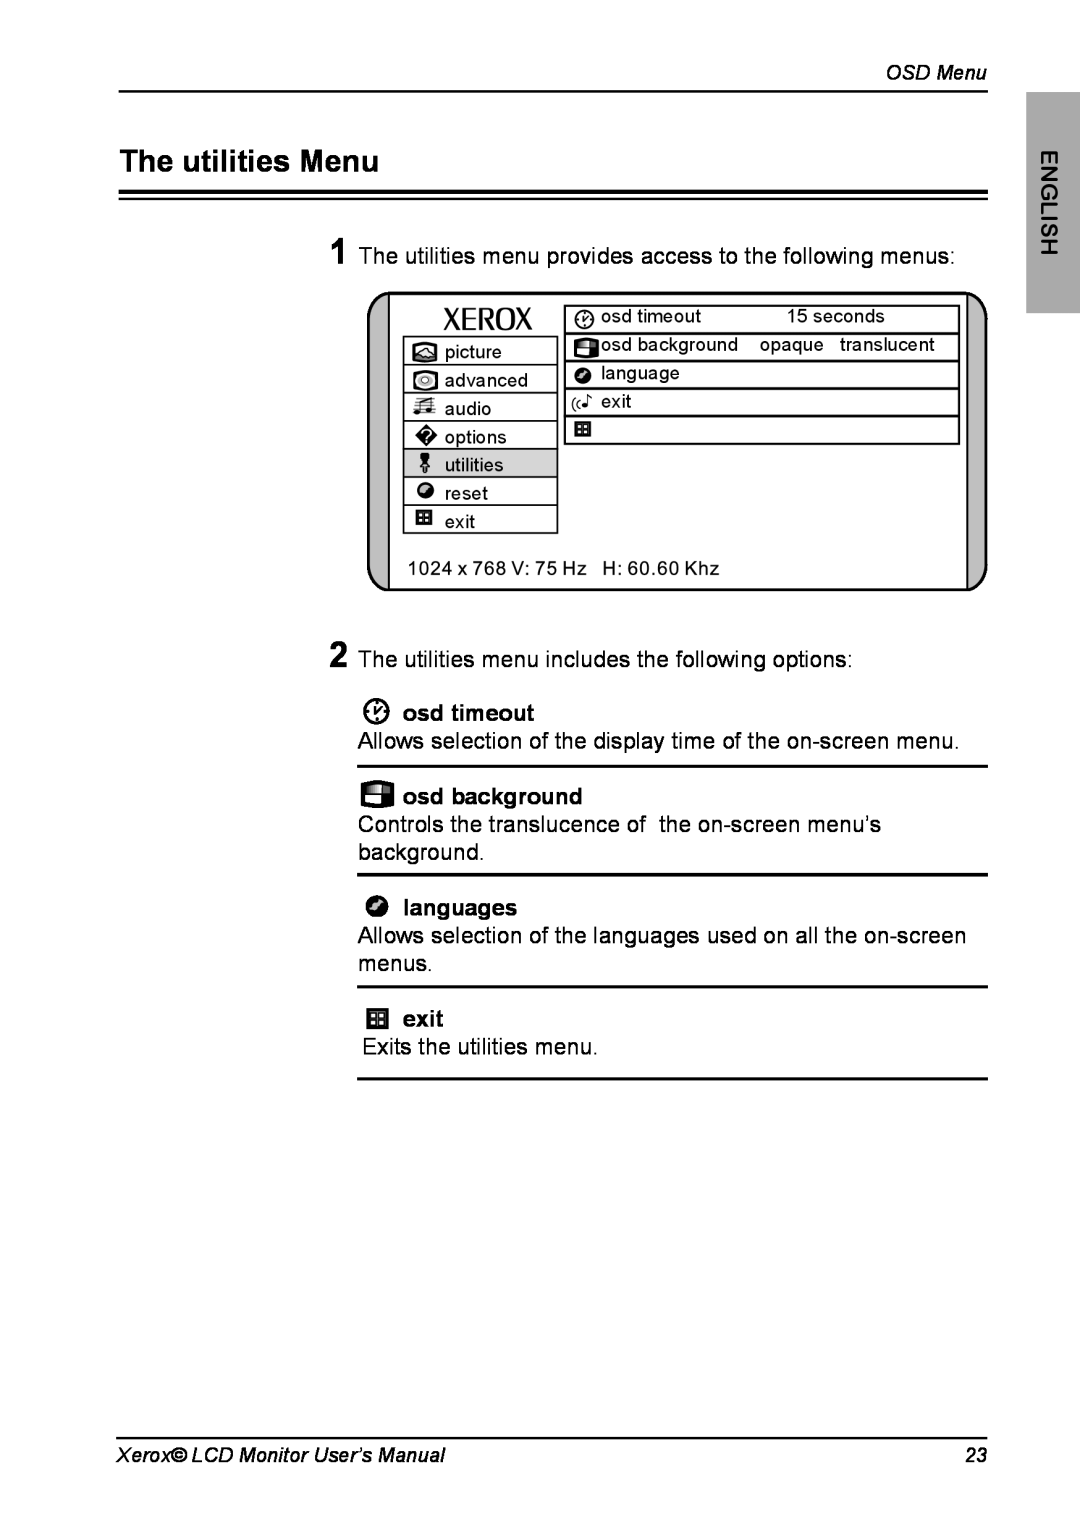 Xerox XM3-19w manual The utilities Menu, osd timeout, osd background, languages, On Description, exit, English 